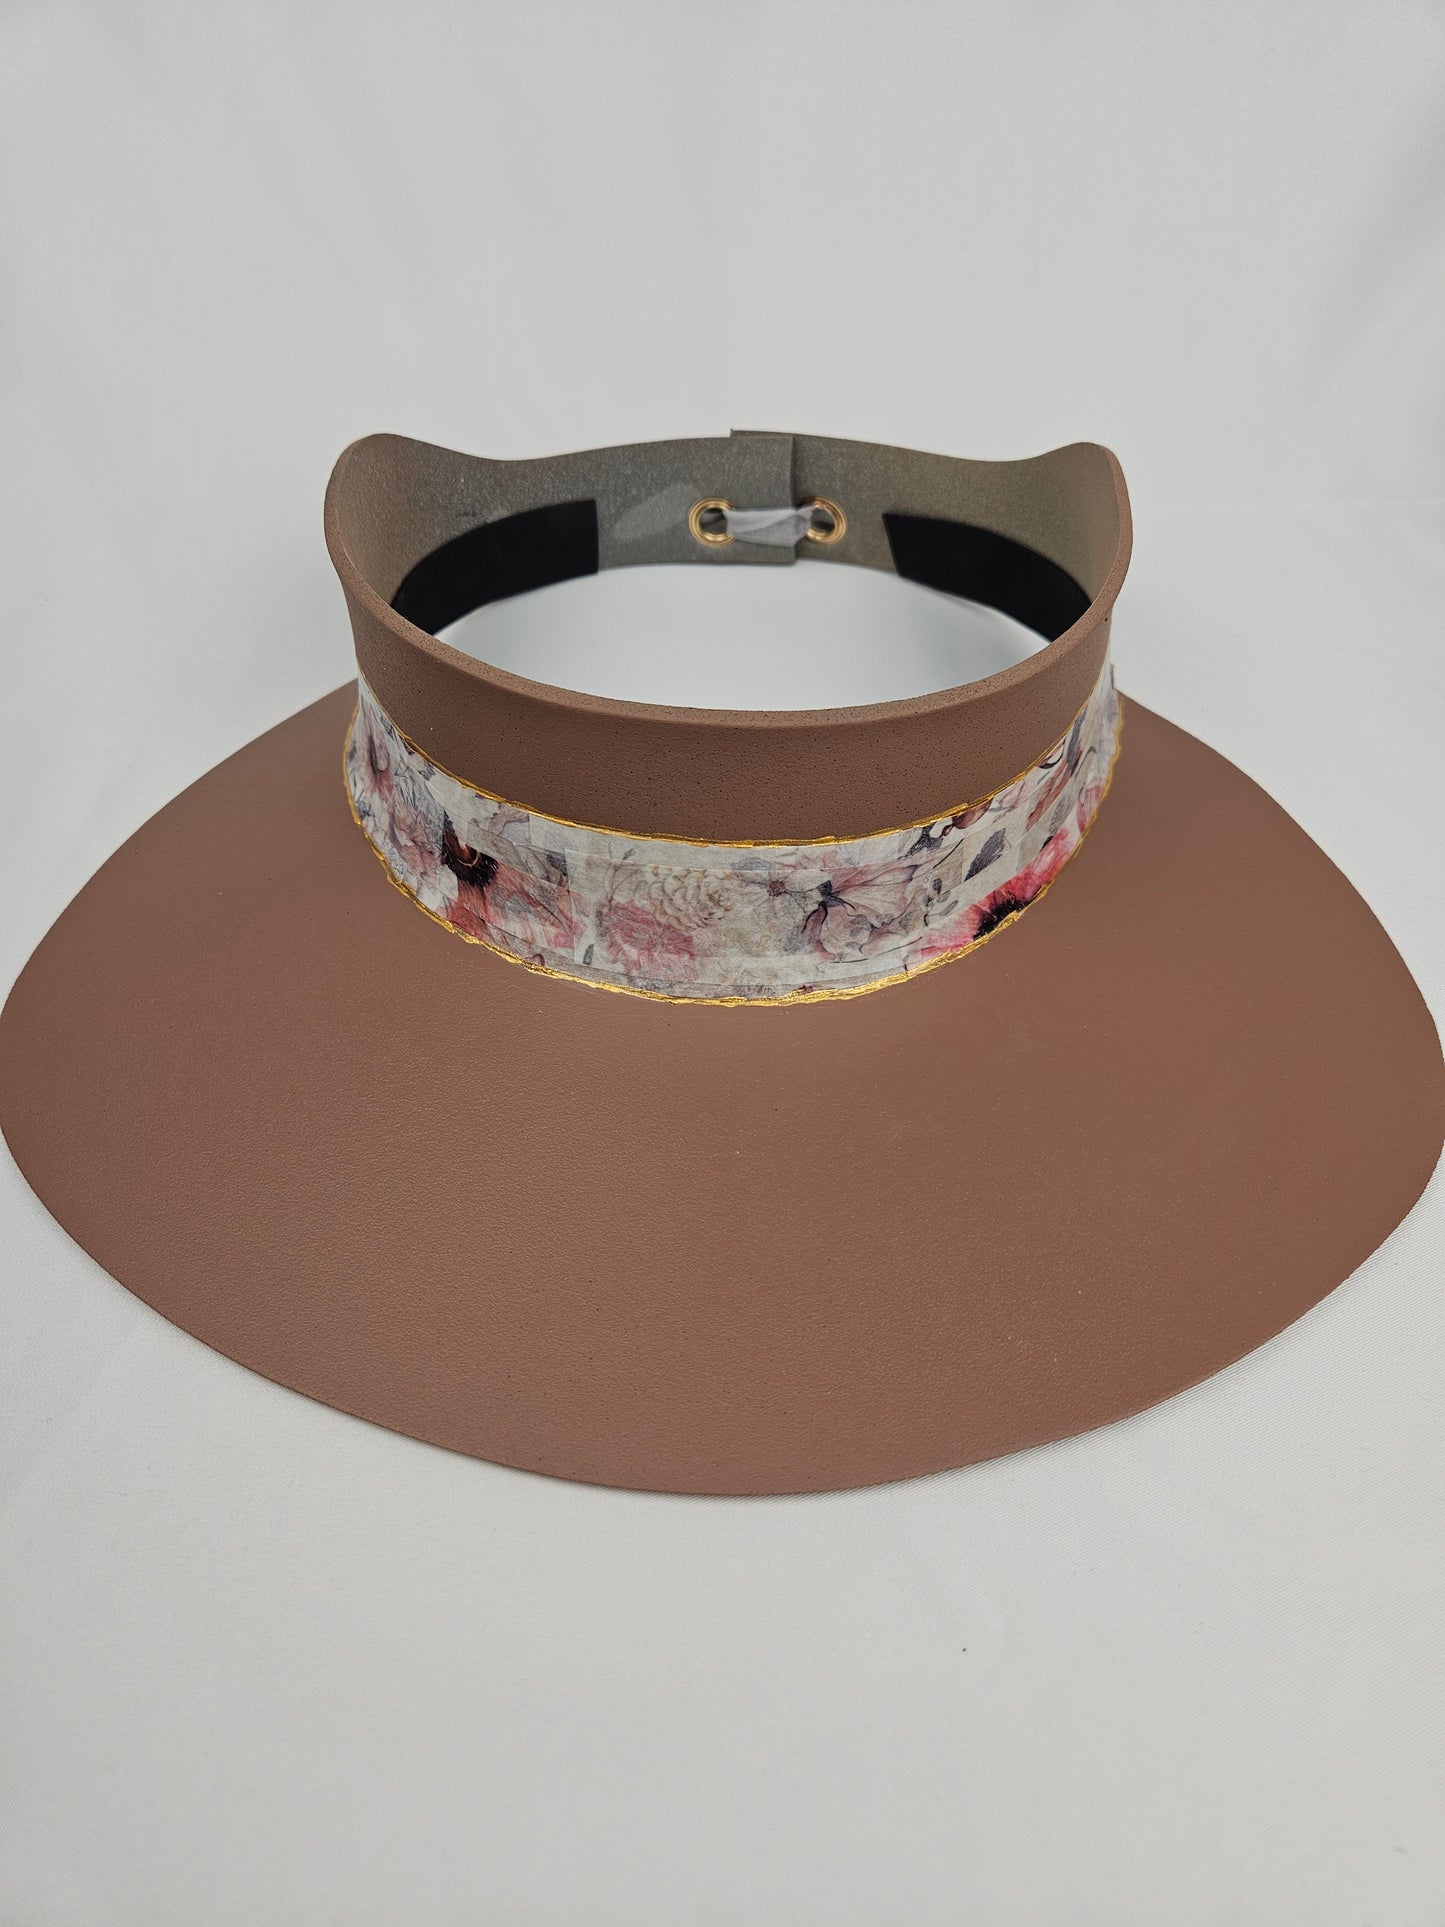 Caramel Brown Audrey Sun Visor Hat with Elegant Pink Floral Band: UV Resistant, Walks, Brunch, Tea, Golf, Wedding, Church, No Headache, Easter, Pool, Beach, Big Brim